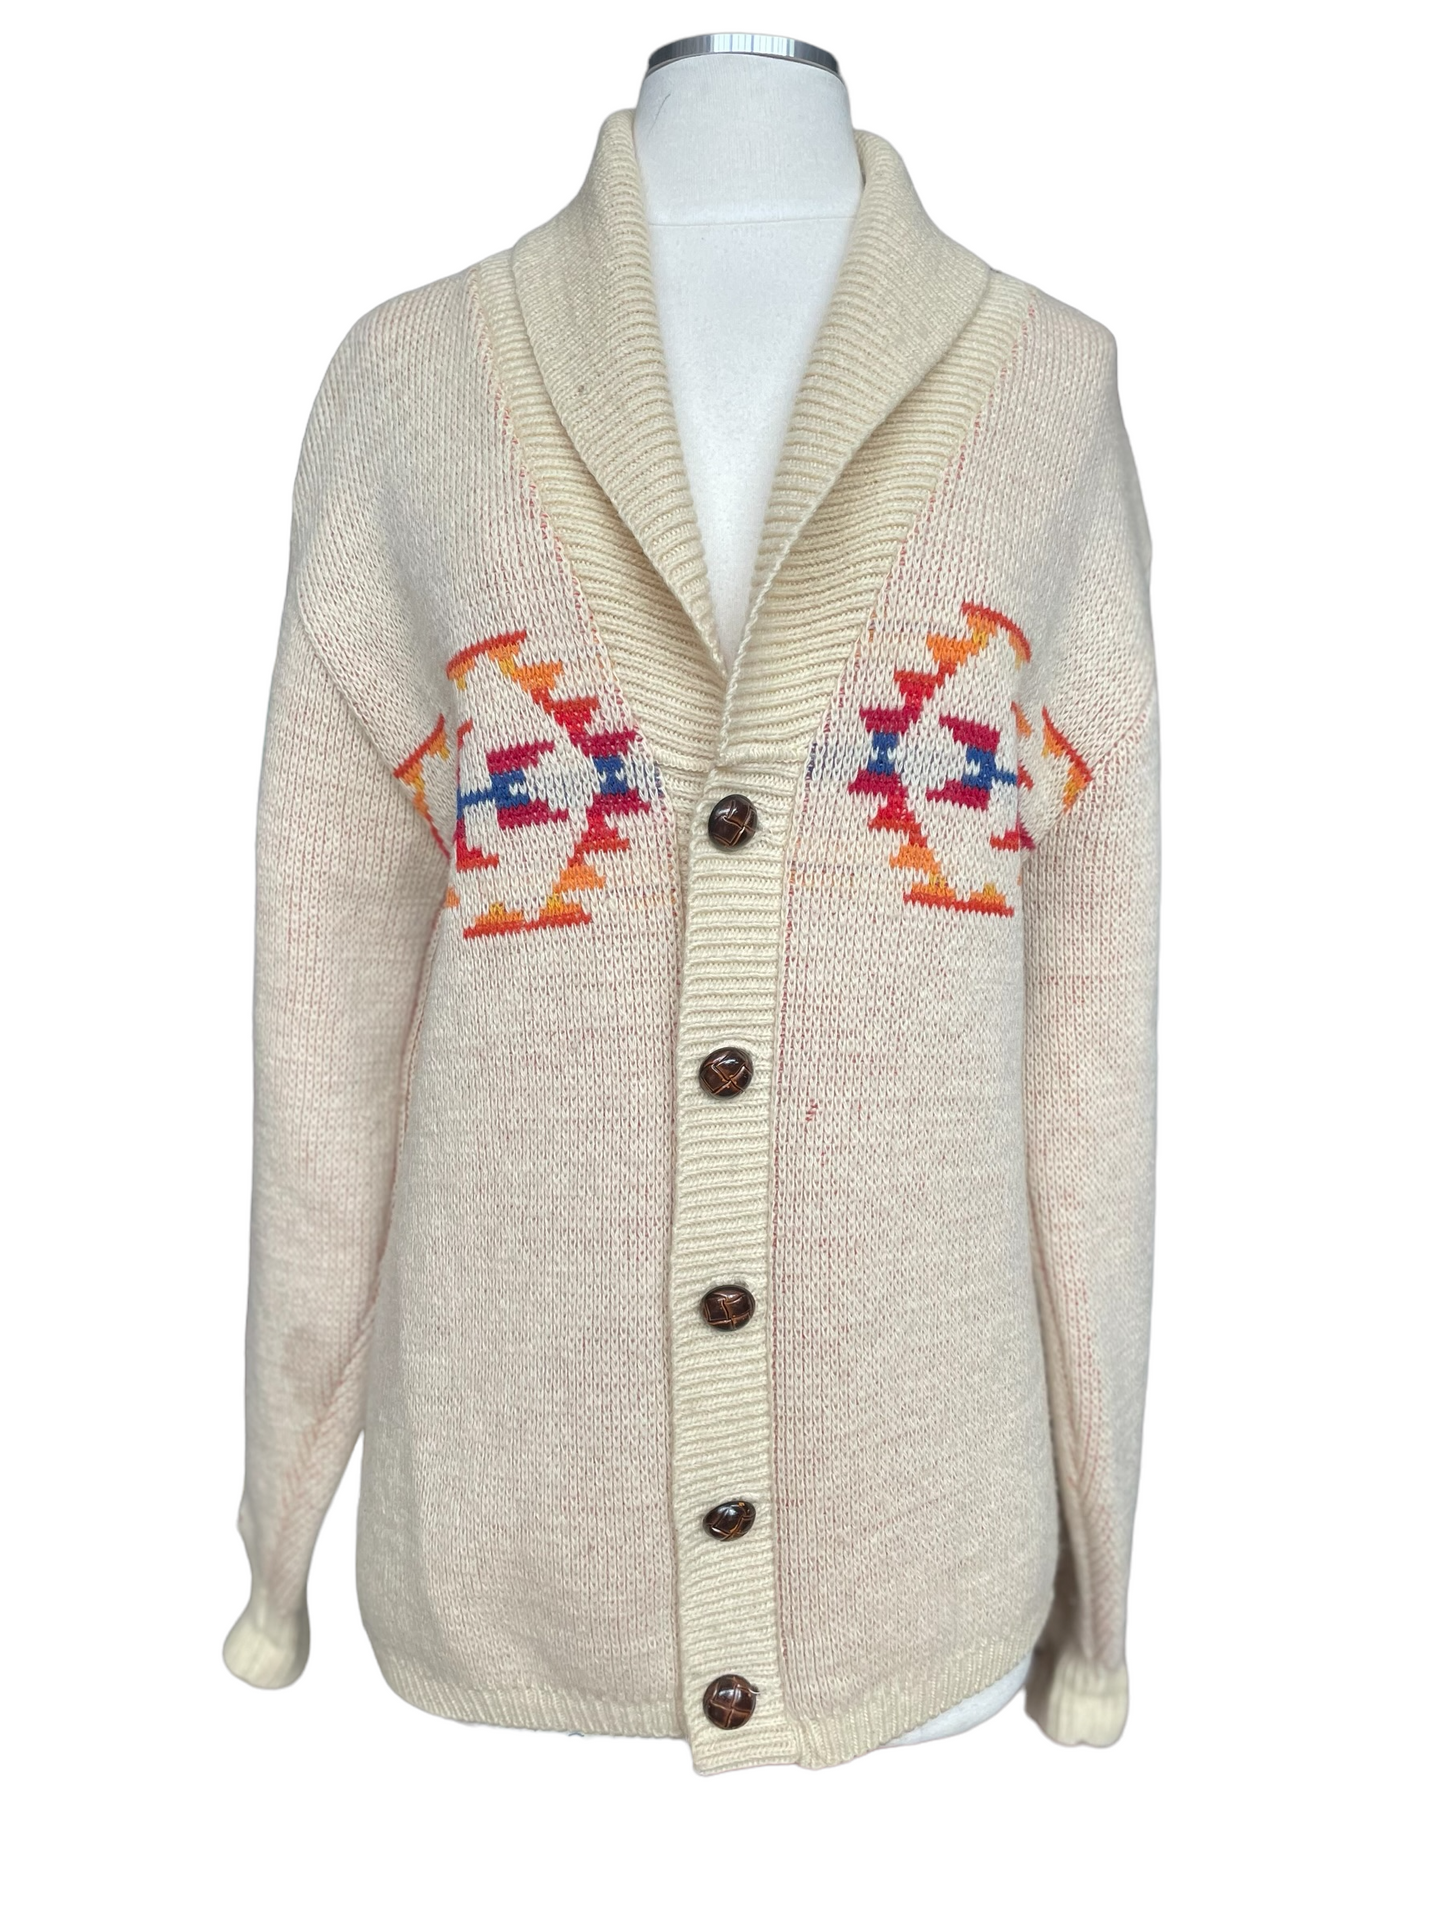 Vintage Pendleton Western Wear Cardigan | Barn Owl Vintage | Seattle Vintage Sweaters Full front view.